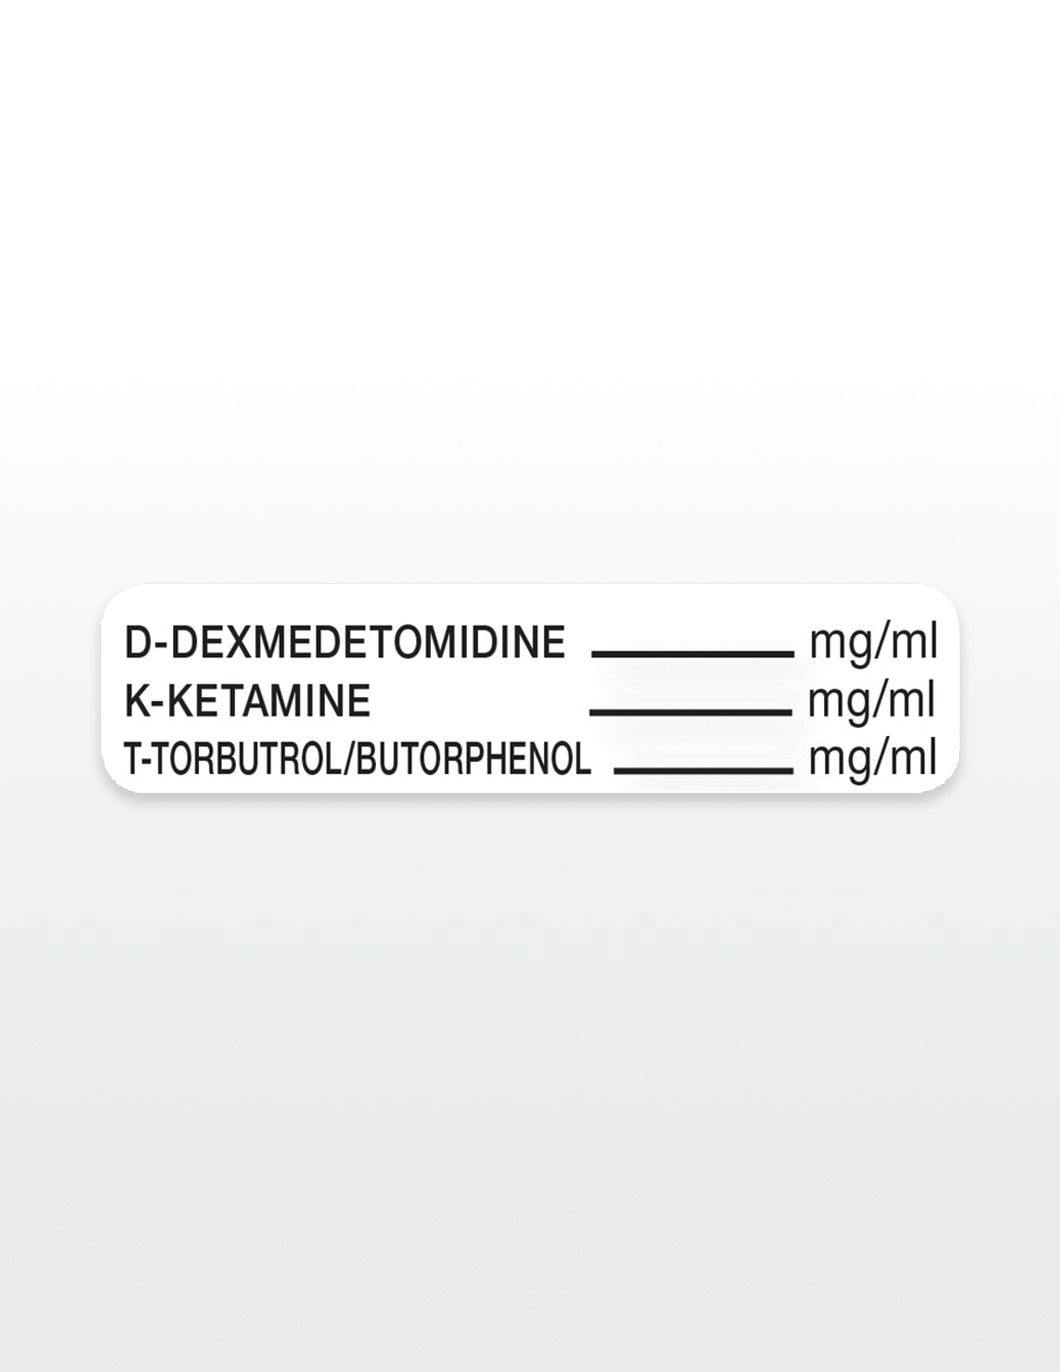 dexmedetomidine-ketamine-tobuterol-butorphanol-drug-syringe-stickers